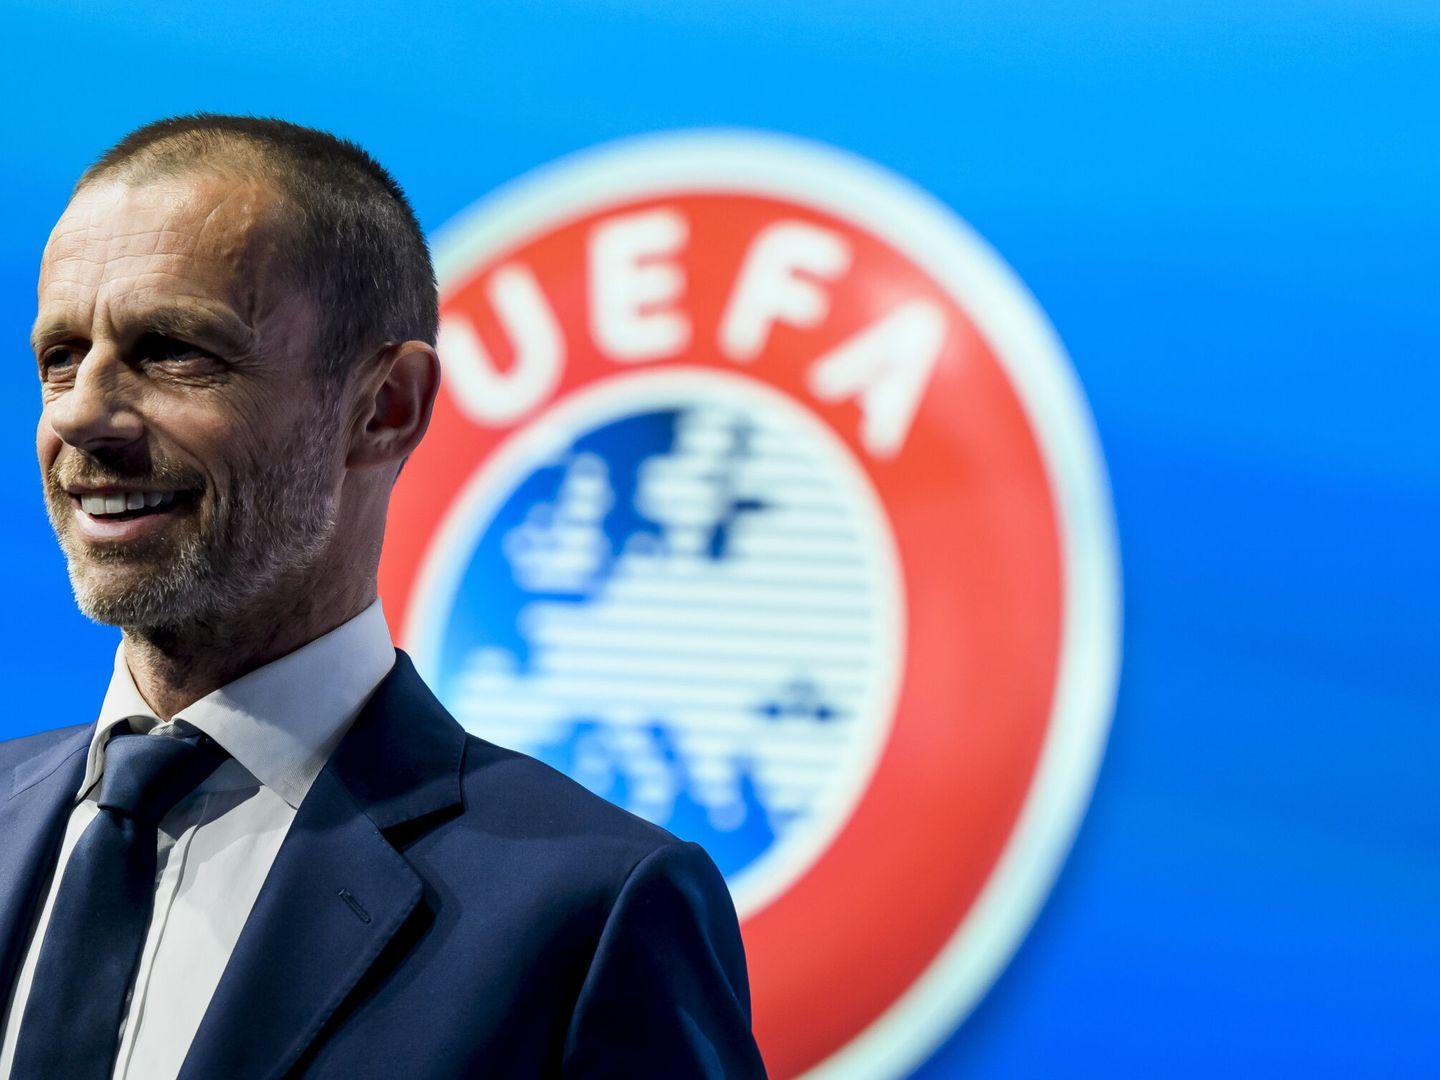 El presidente de la UEFA, Aleksander Ceferino